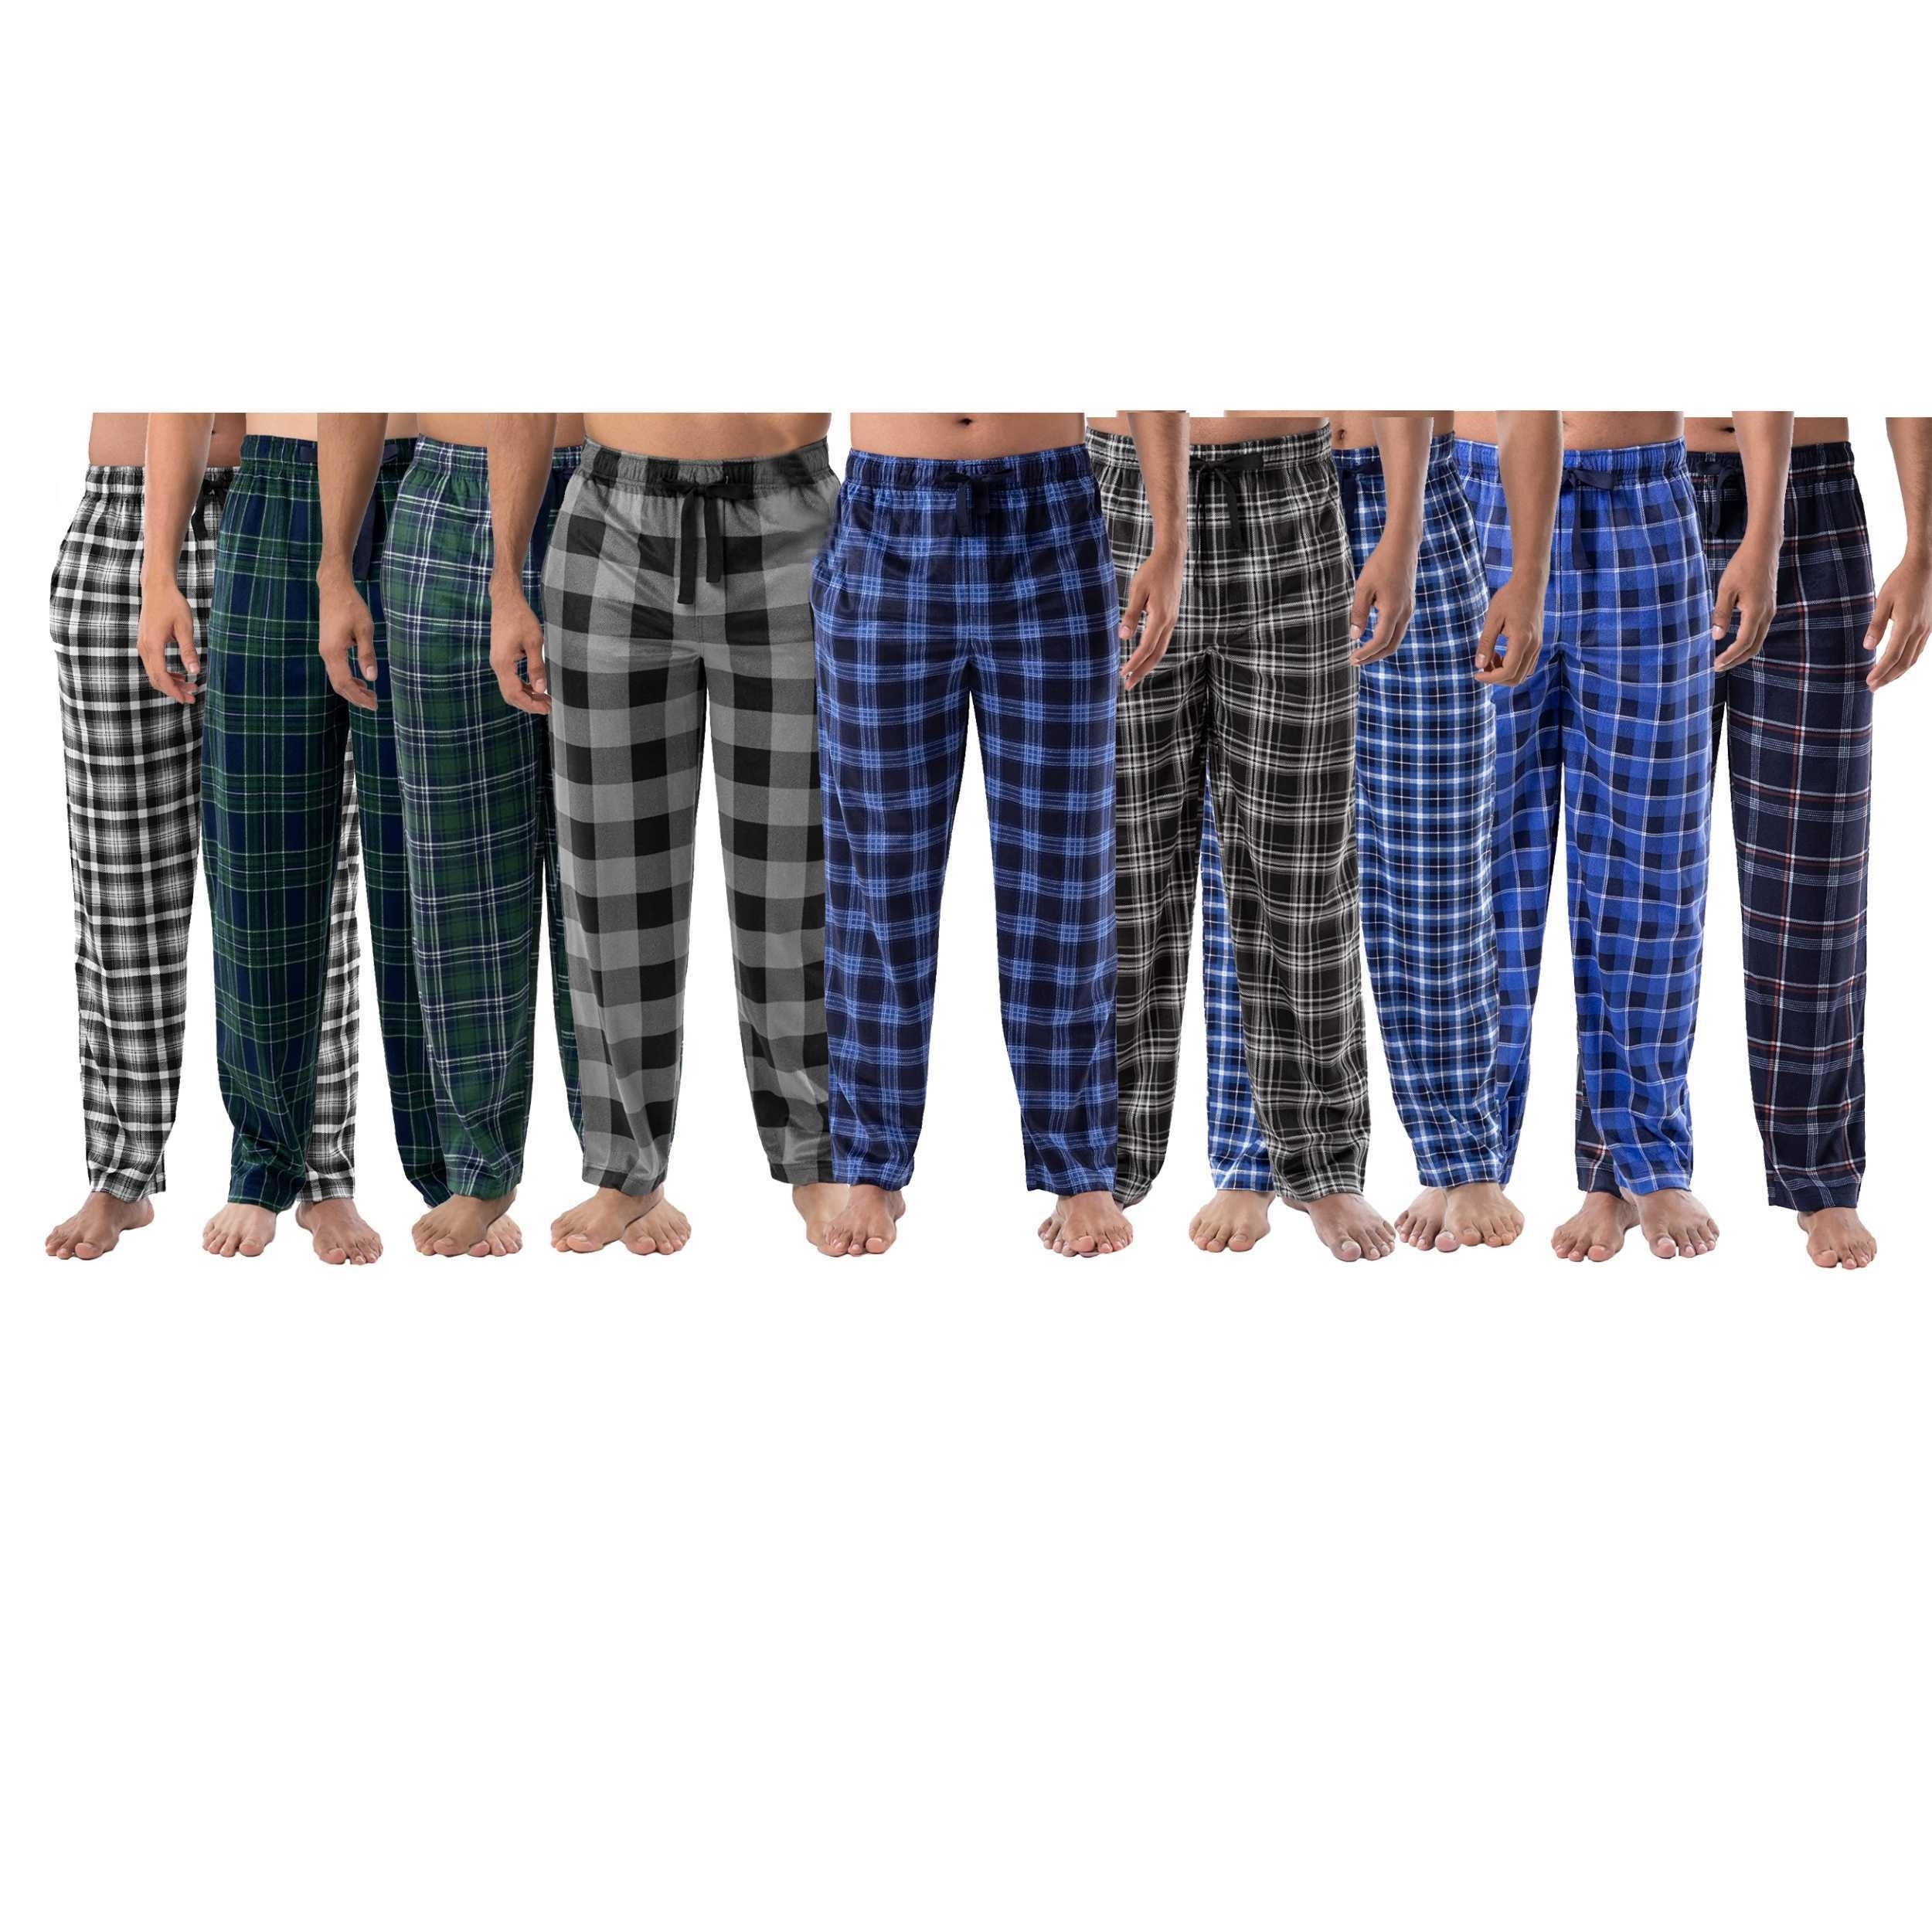 3 Pack: Men's Soft Micro Fleece Plaid Print Pajama Lounge Pants - X-Large